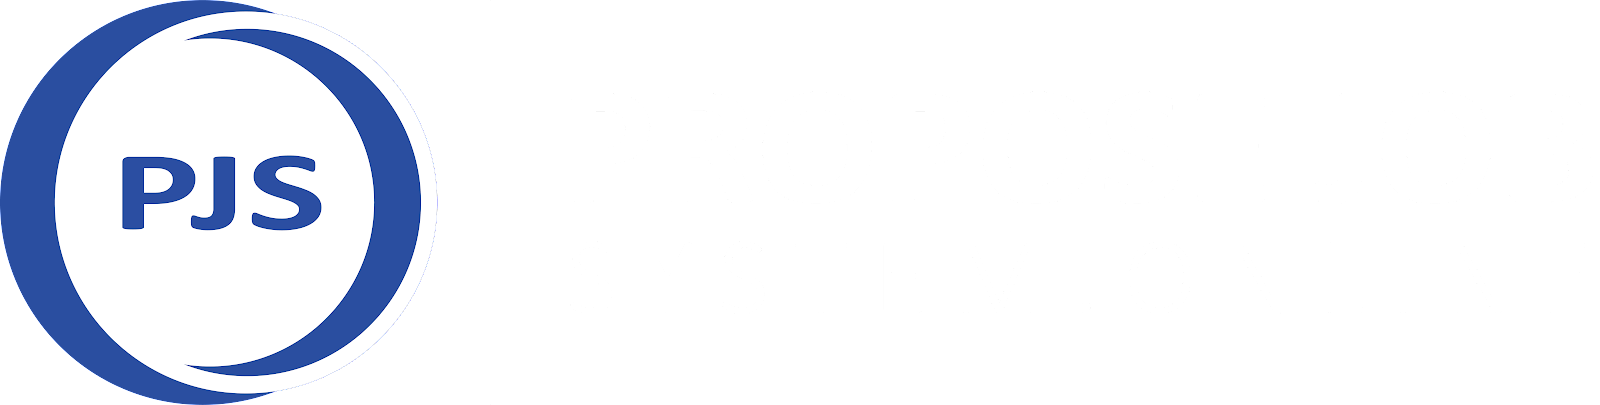 Propose Job System